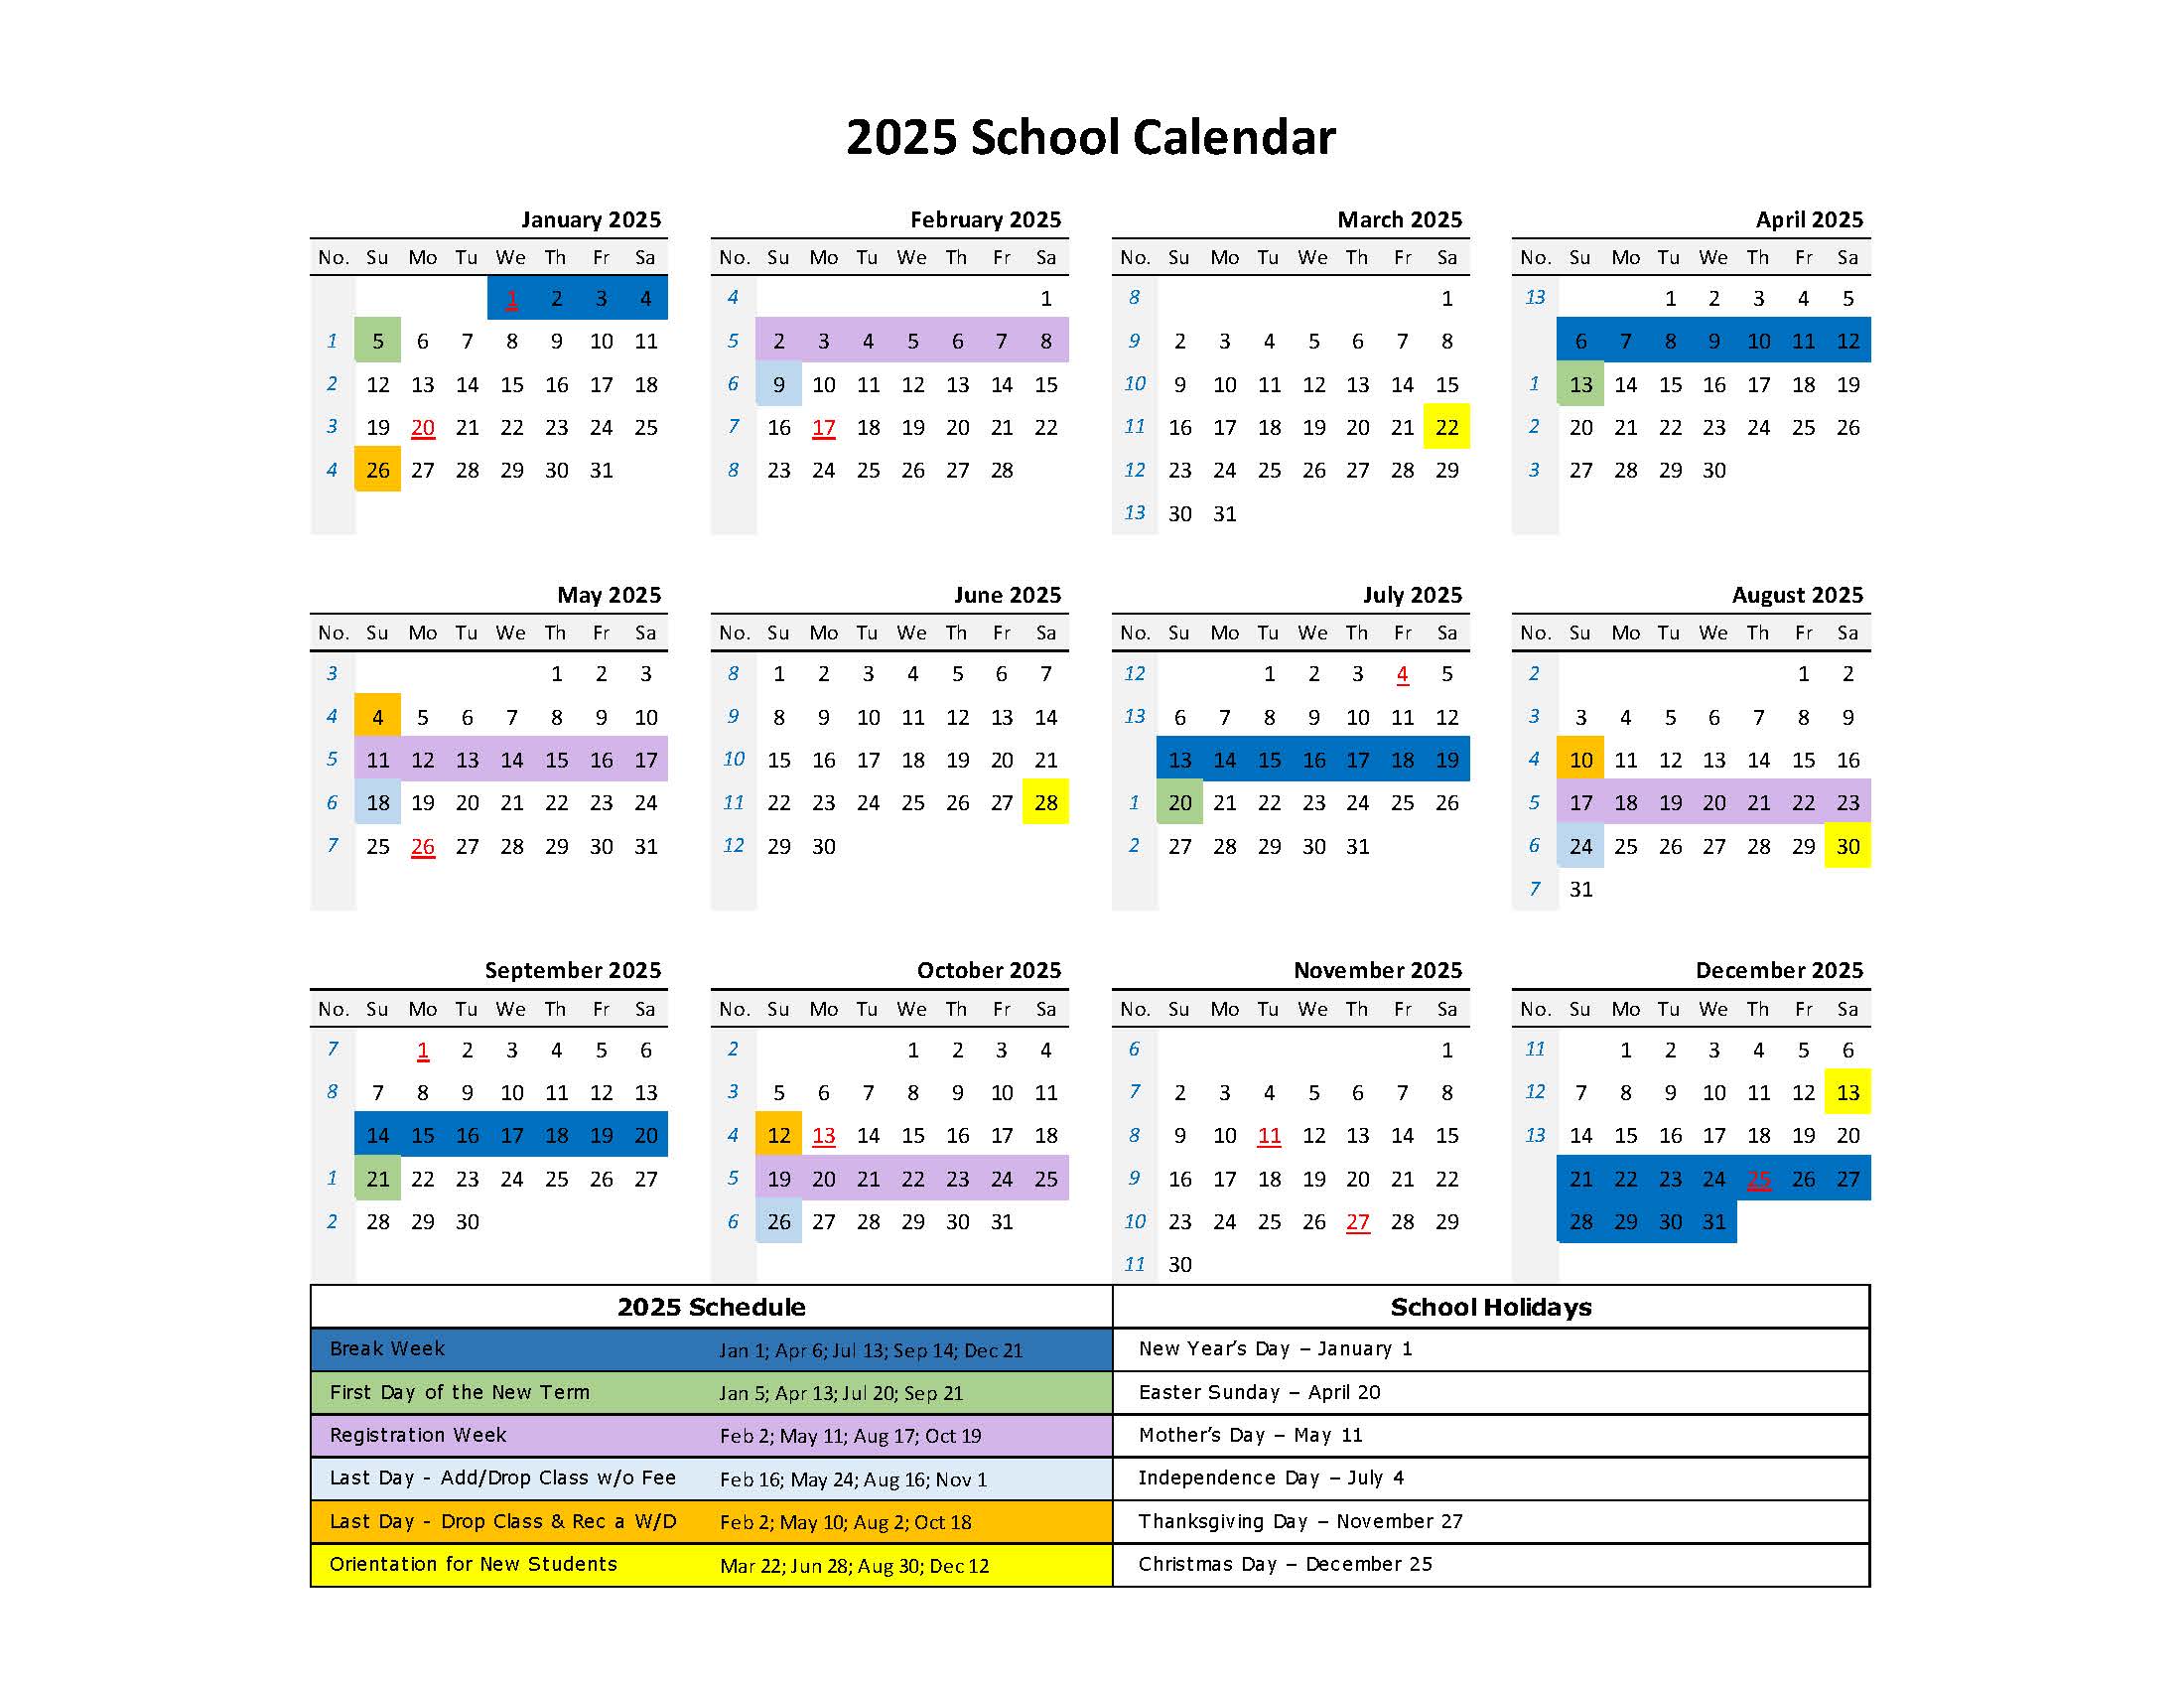 Midwife Training Center - 2025 School Calendar